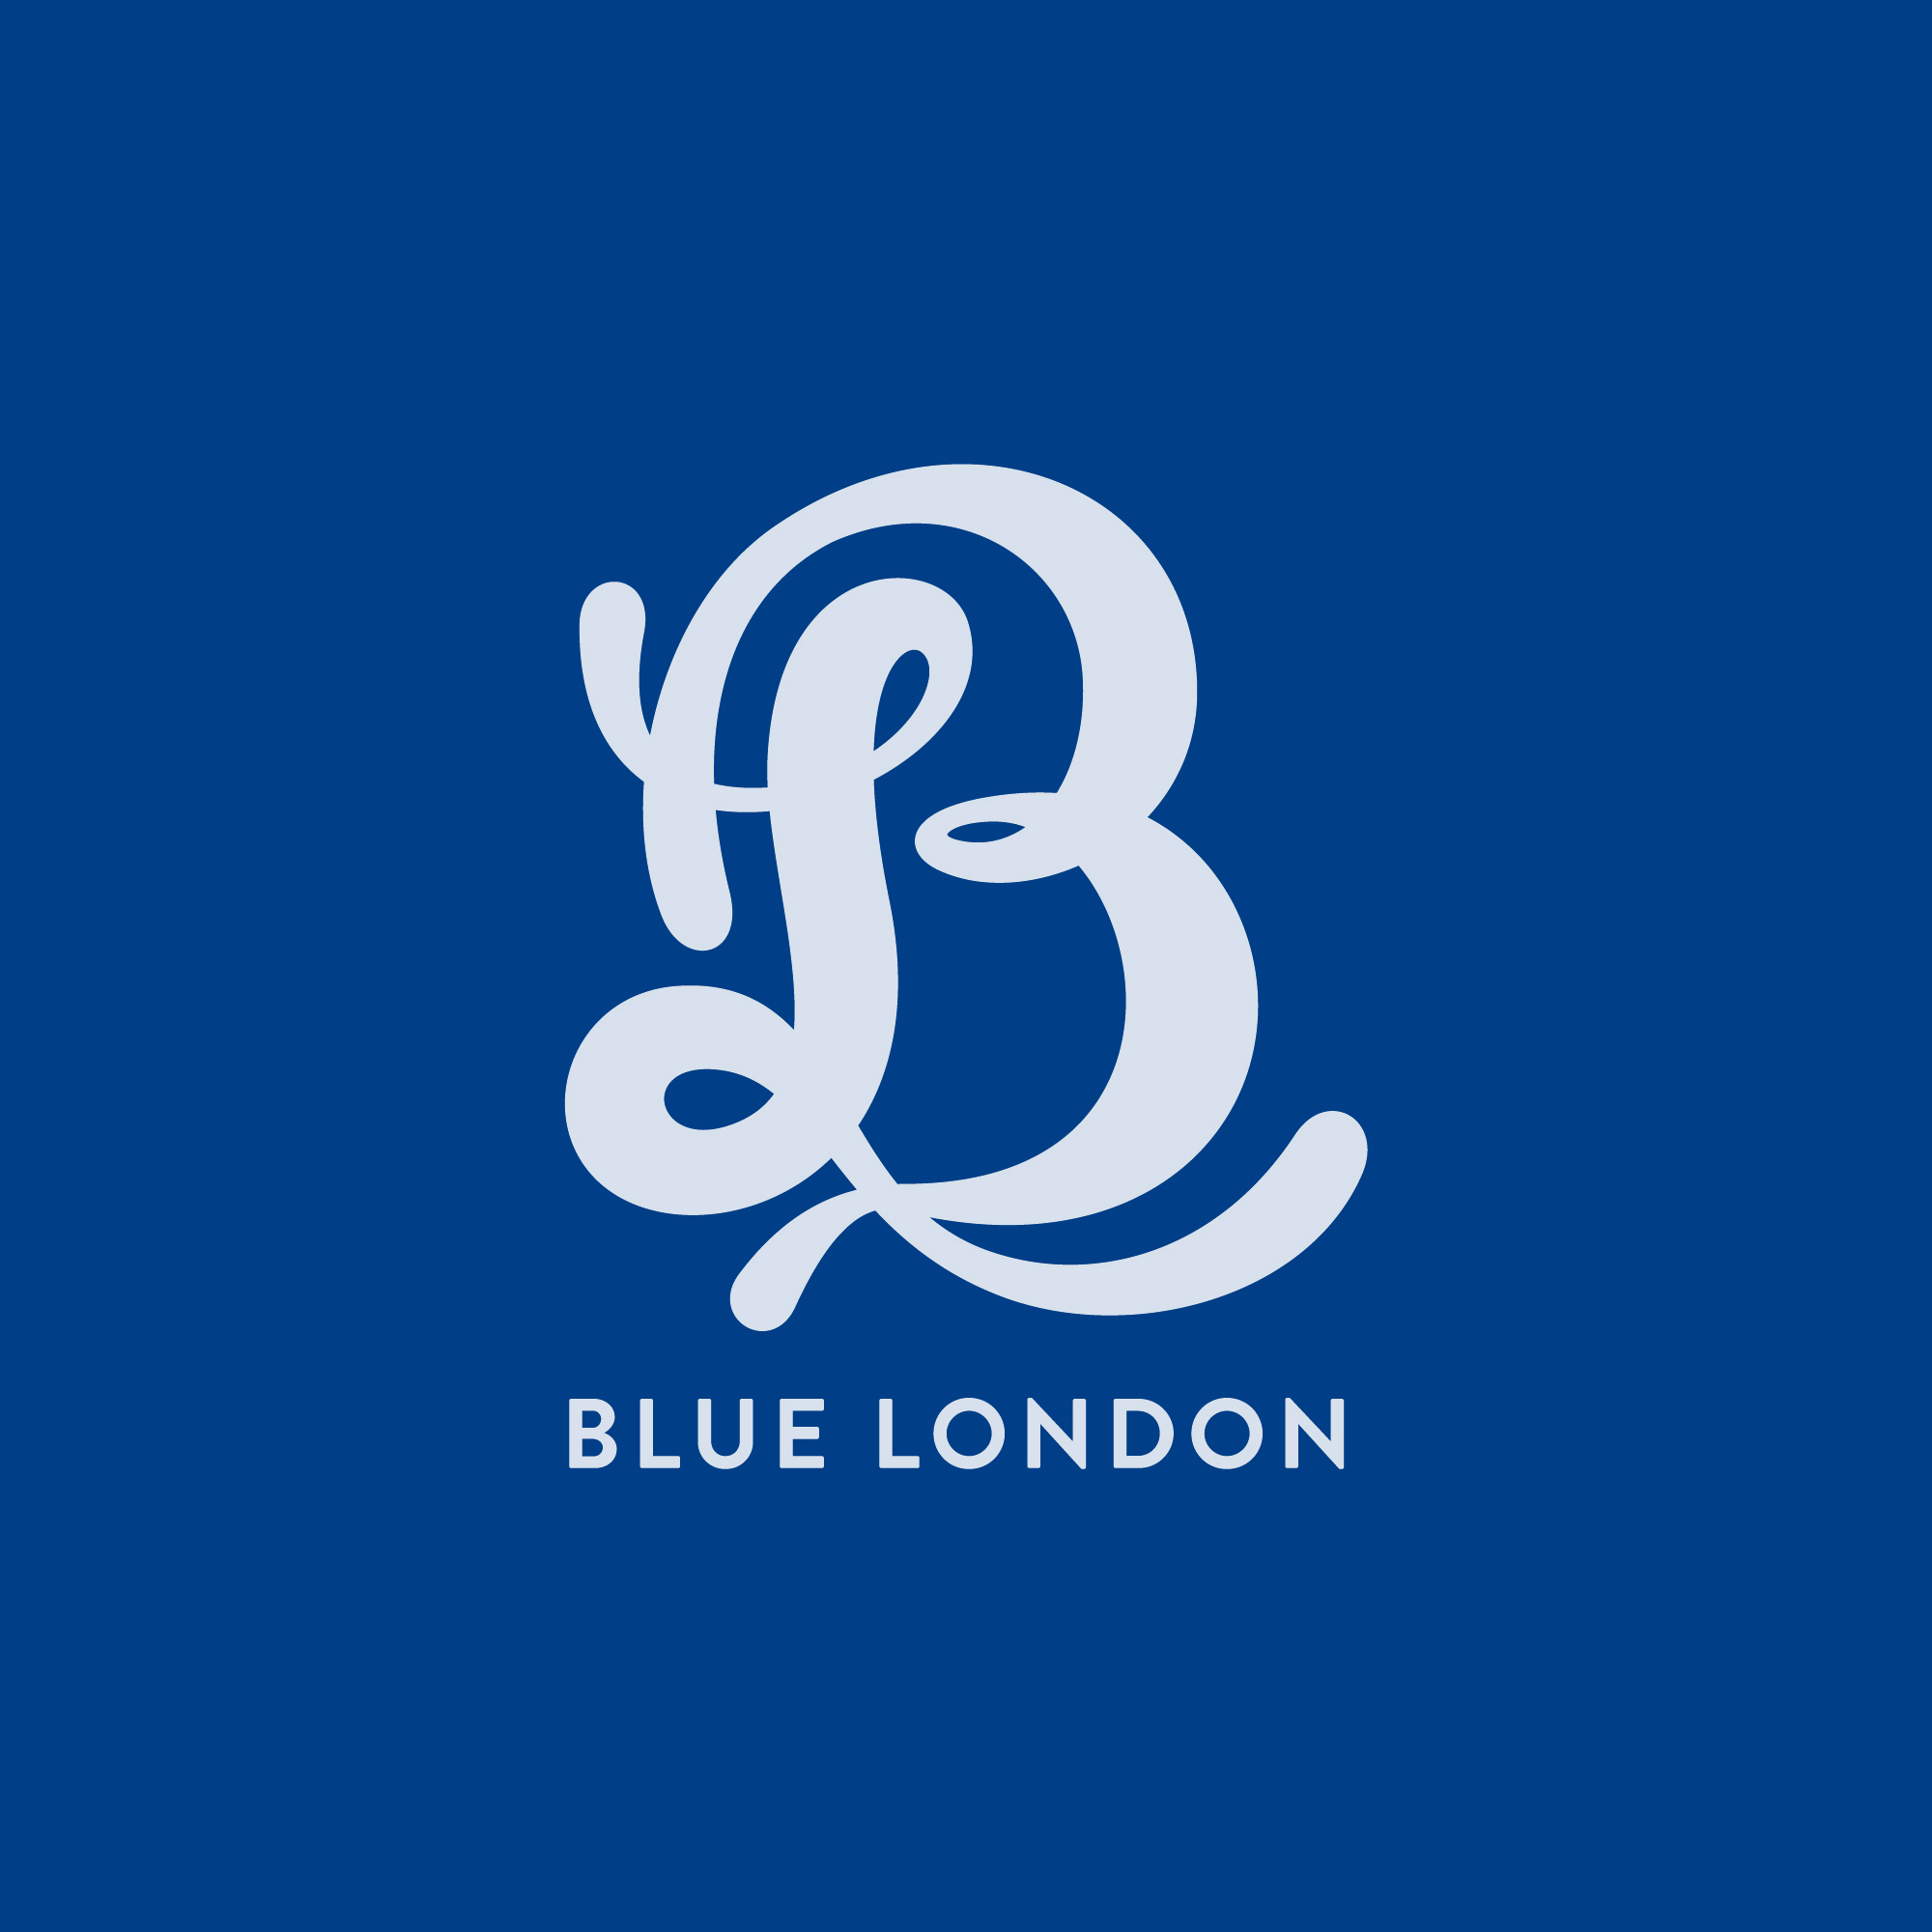 Blue London monogram branding identity design by Maximillian Piras